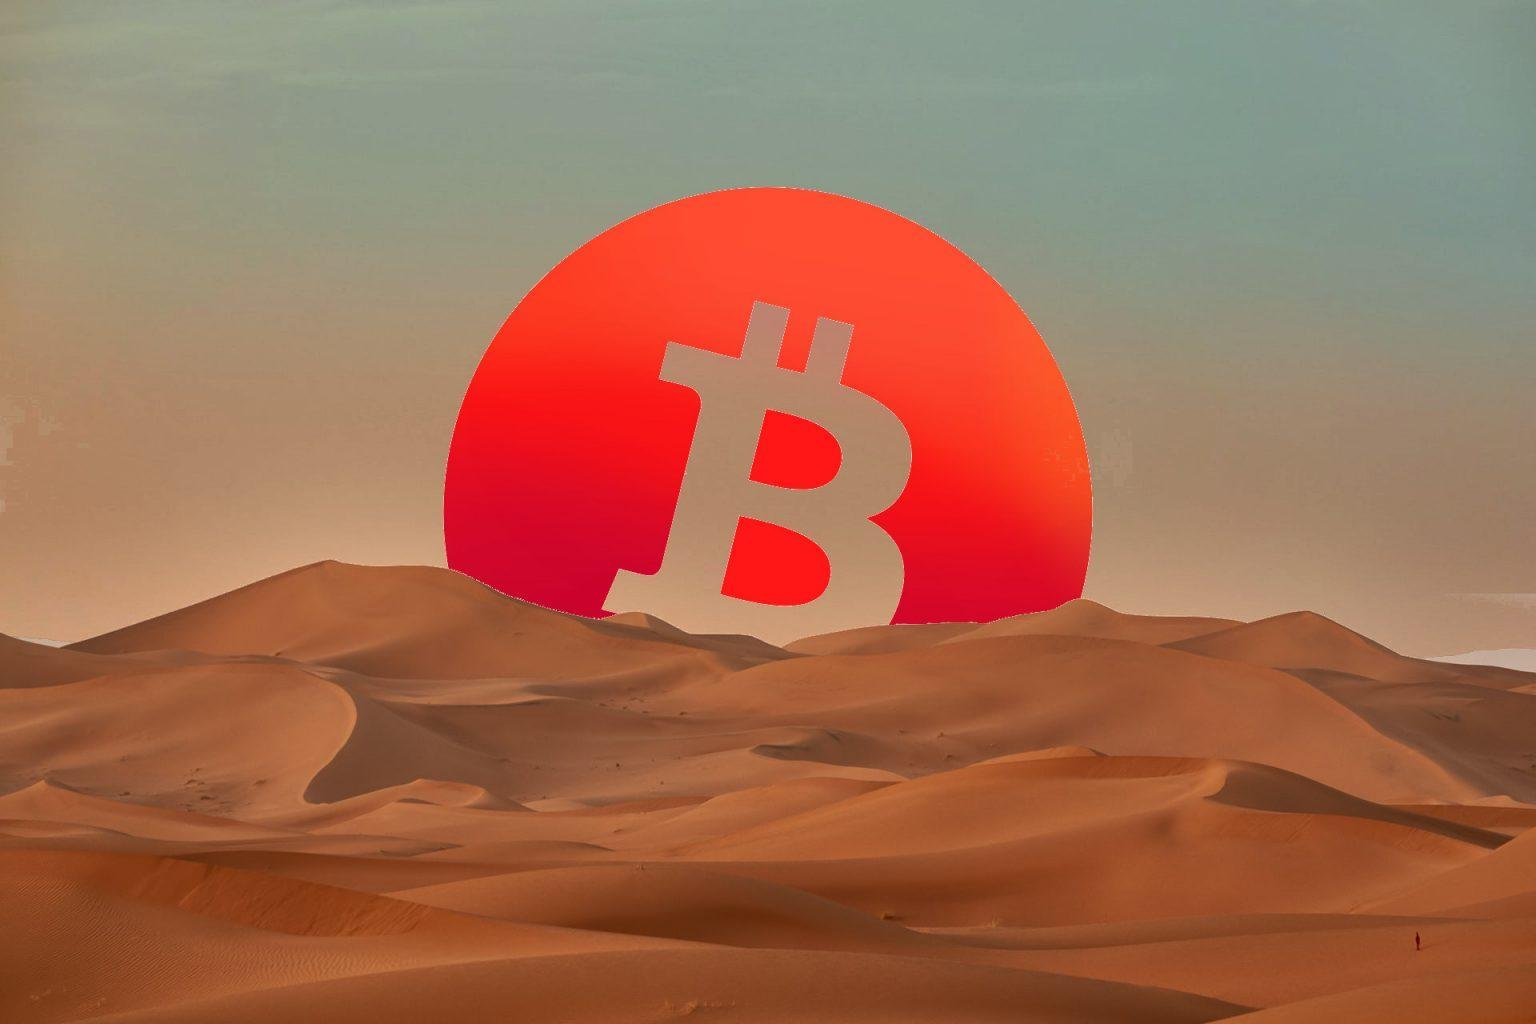 bitcoin dunes artwork